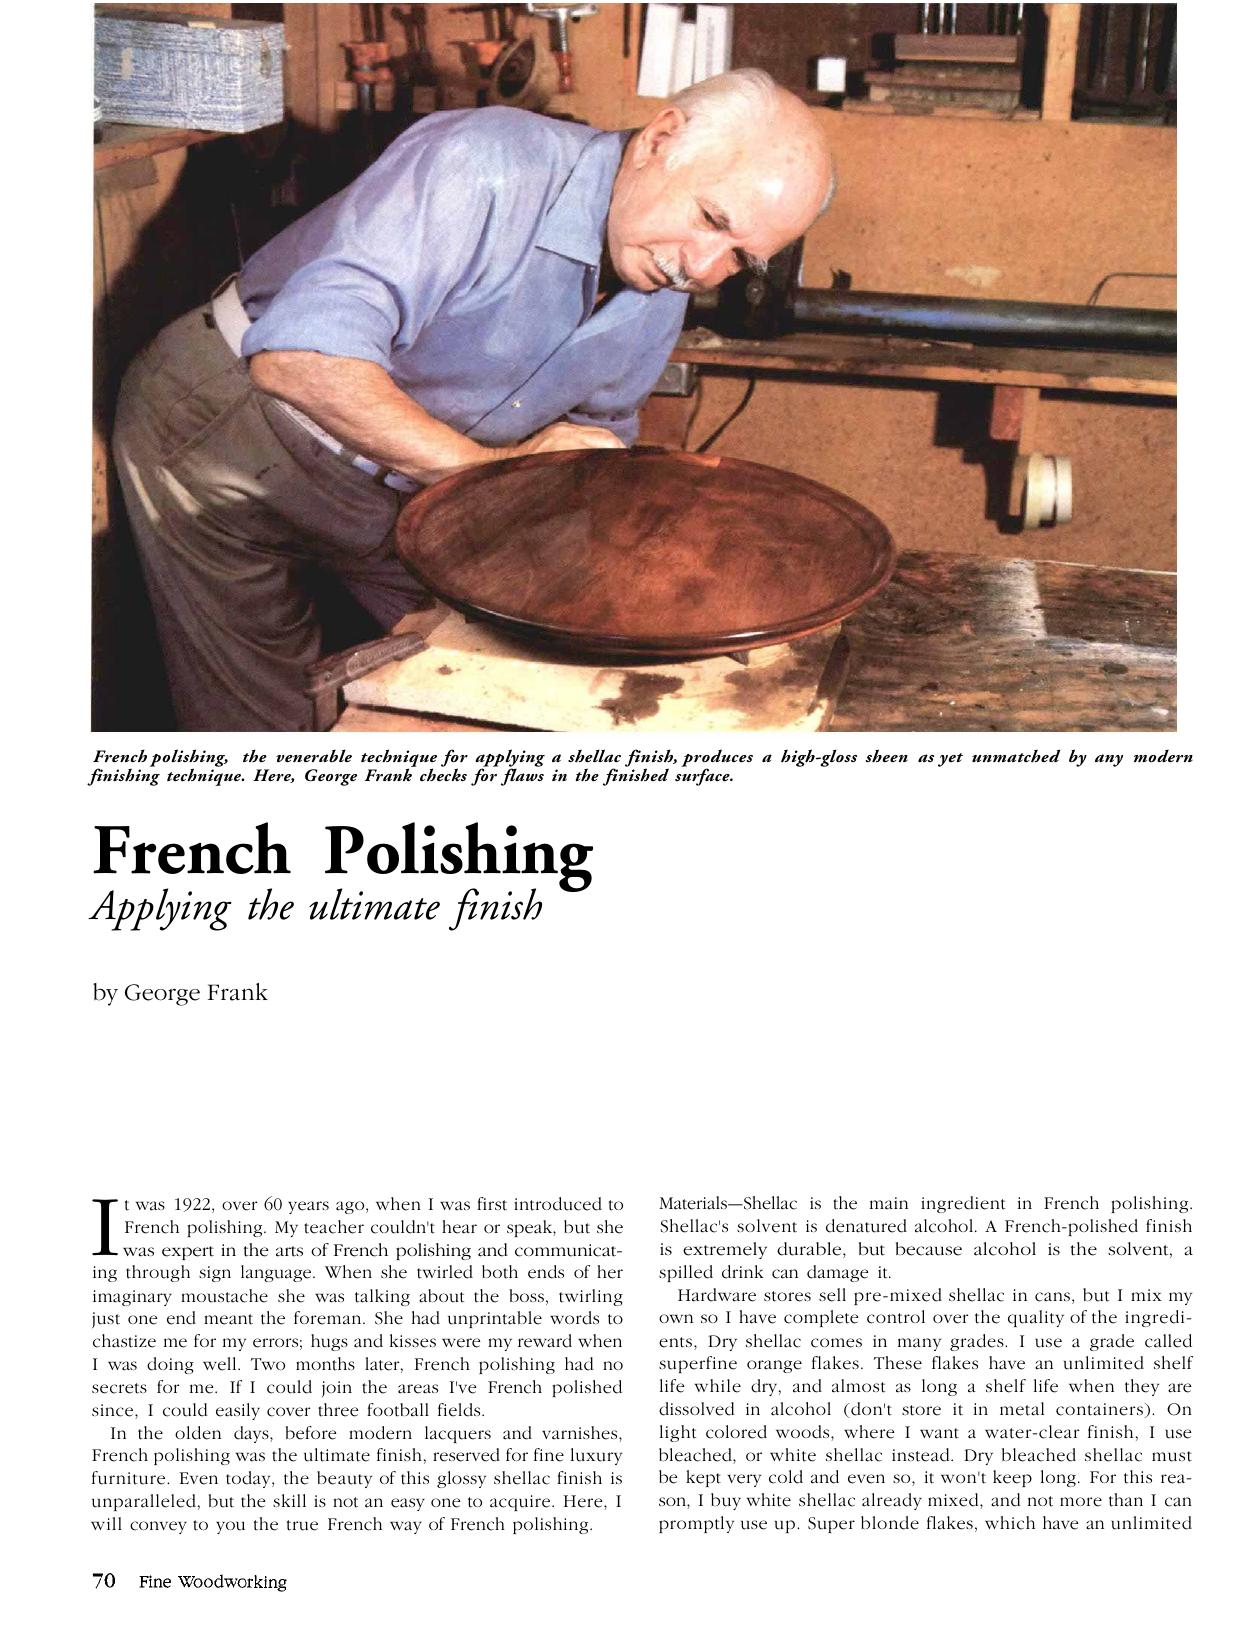 French Polishing by George Frank